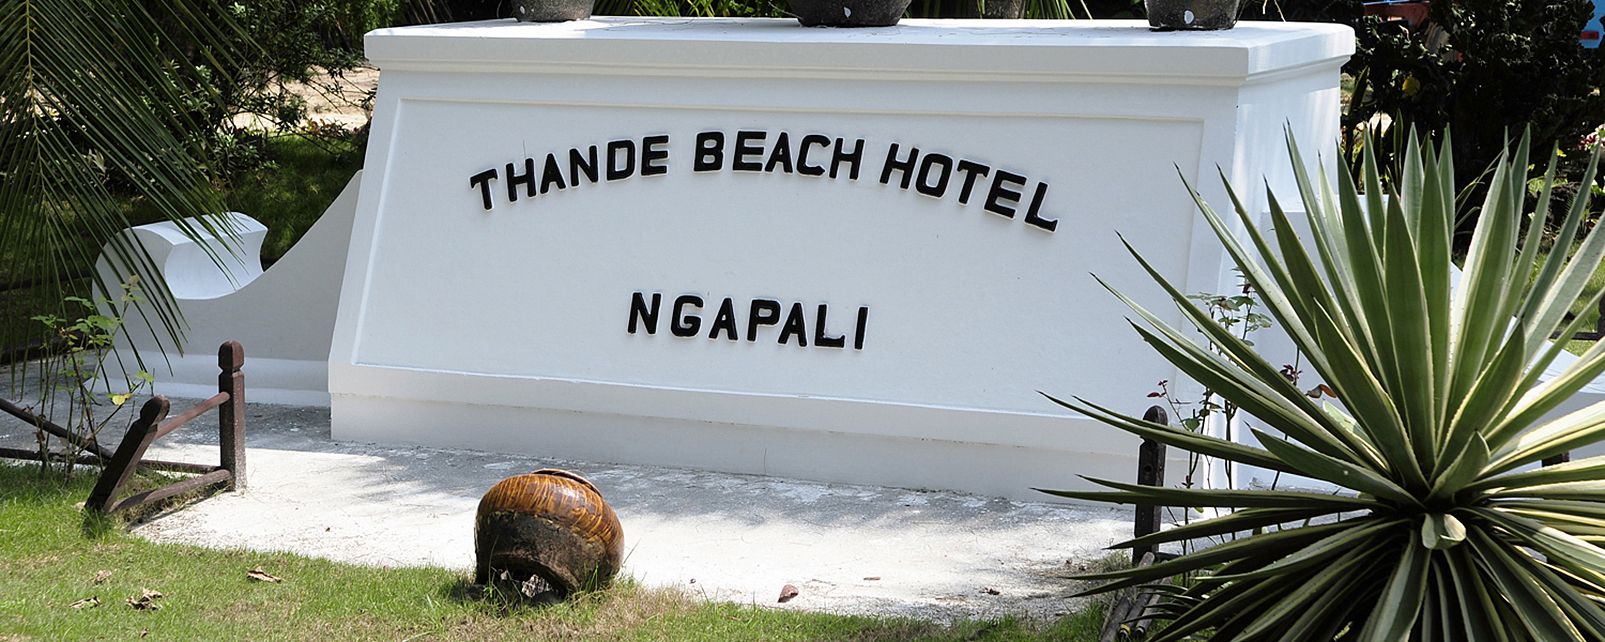 Hotel Thande Beach Nagpali